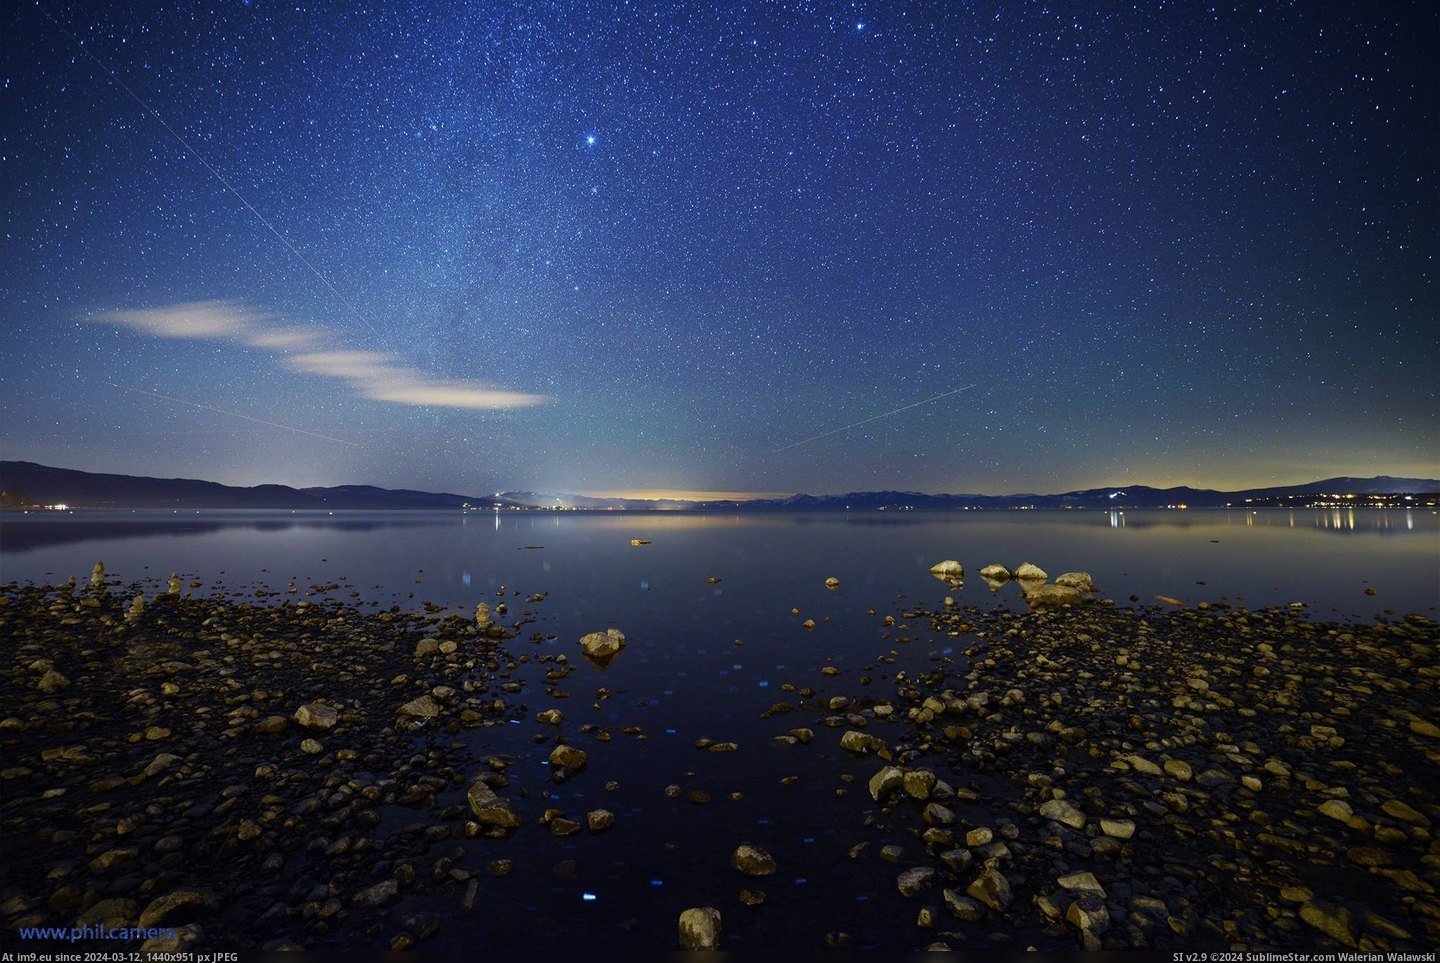 #Night #Lake #North #Interesting #Shore #Waters #Breath #Perfectly #Rocks #Stars #Tahoe [Earthporn] Breath-taking stars, perfectly still waters, and interesting rocks on the North Shore of Lake Tahoe last night [oc b Pic. (Obraz z album My r/EARTHPORN favs))